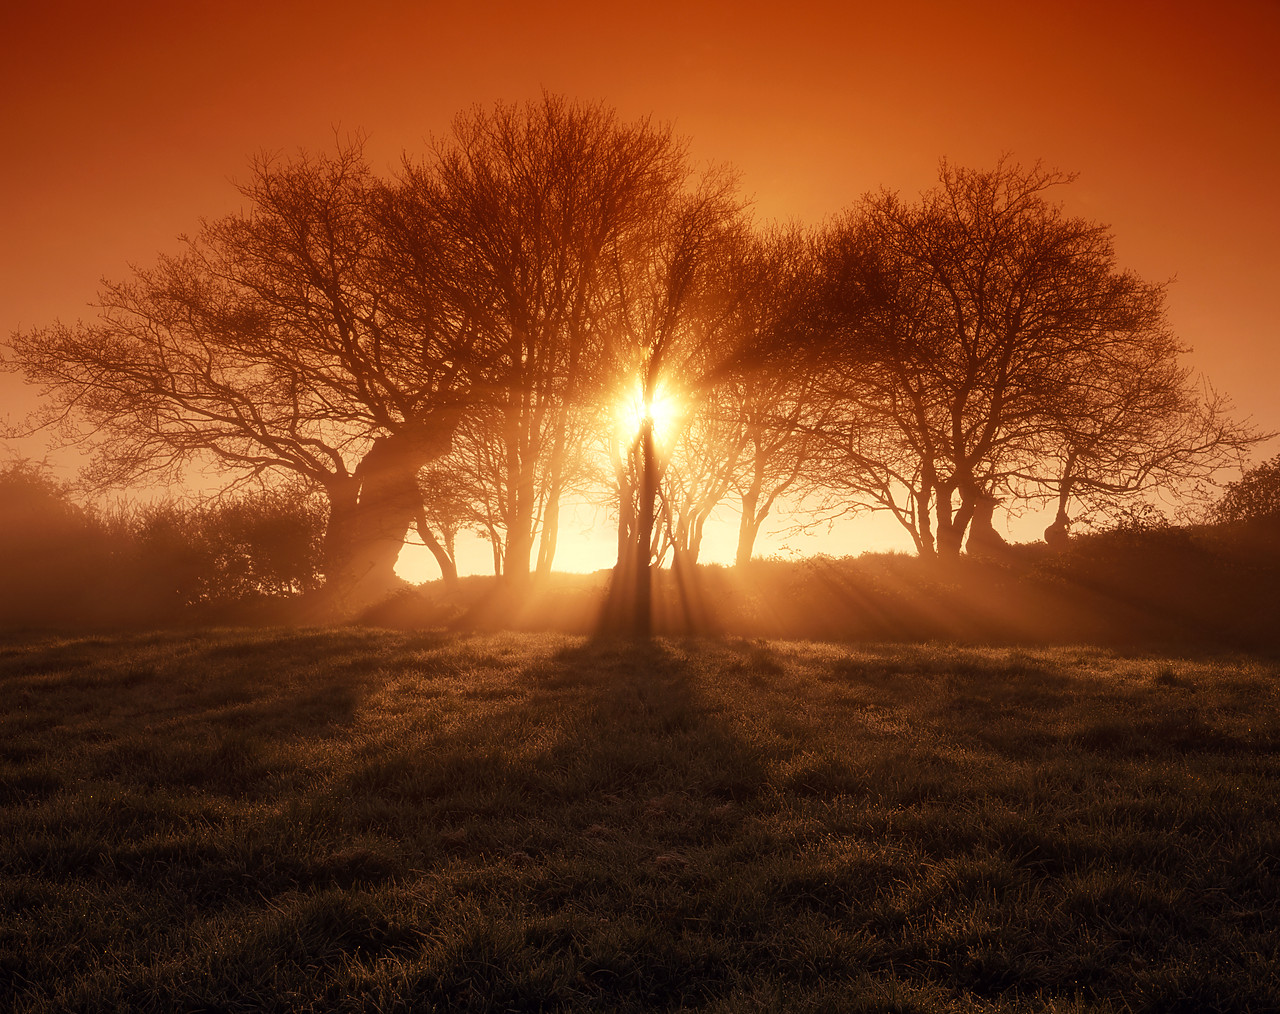 #955297-1 - Morning Sunrays through Trees, Surlingham, Norfolk, England